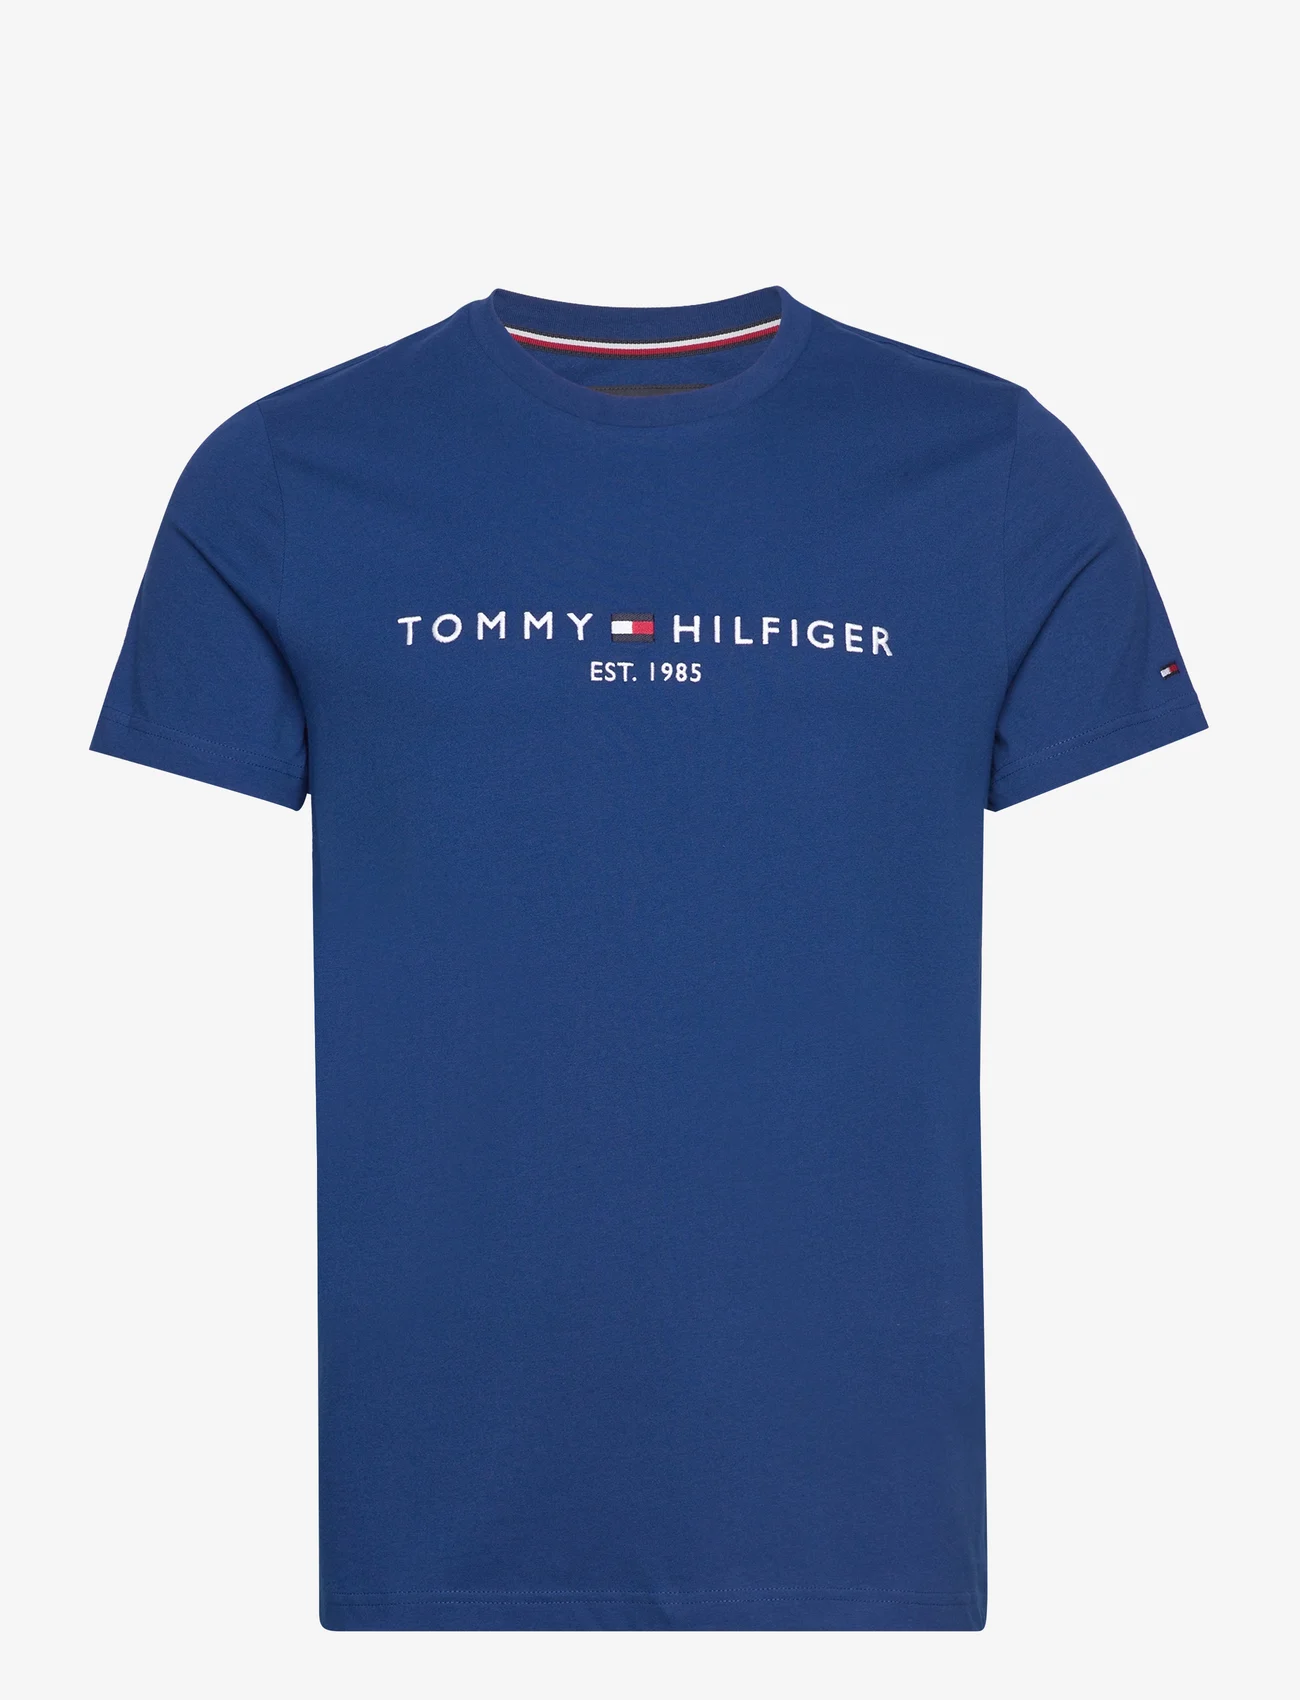 Tommy Hilfiger - TOMMY LOGO TEE - kortärmade t-shirts - anchor blue - 0